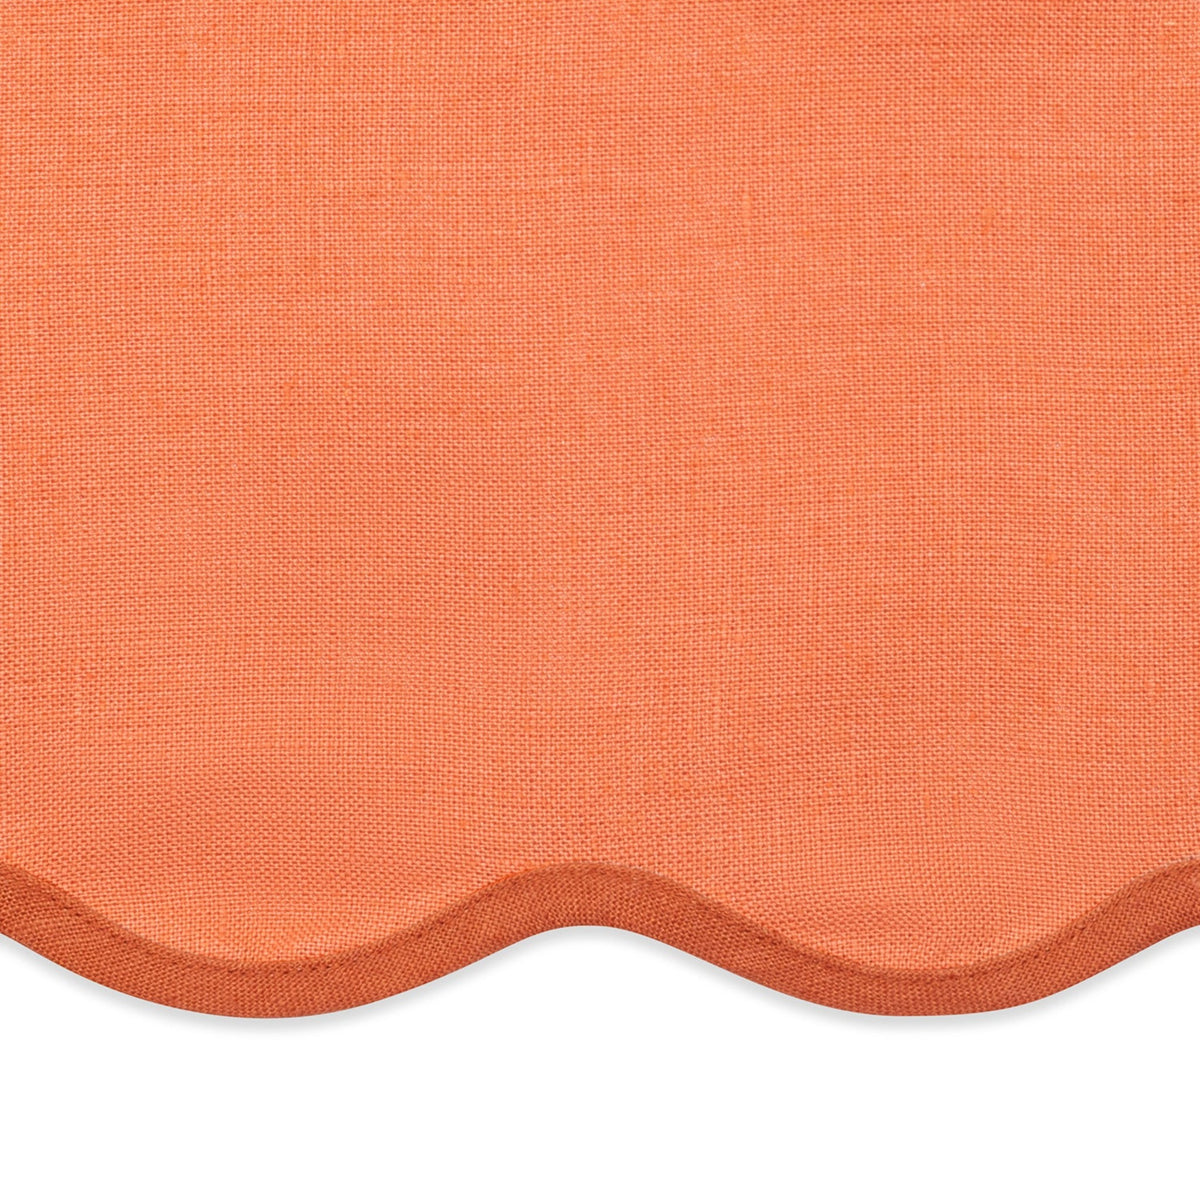 Swatch Sample of Matouk Scallop Edge Table Linens in Carnelian Persimmon Color